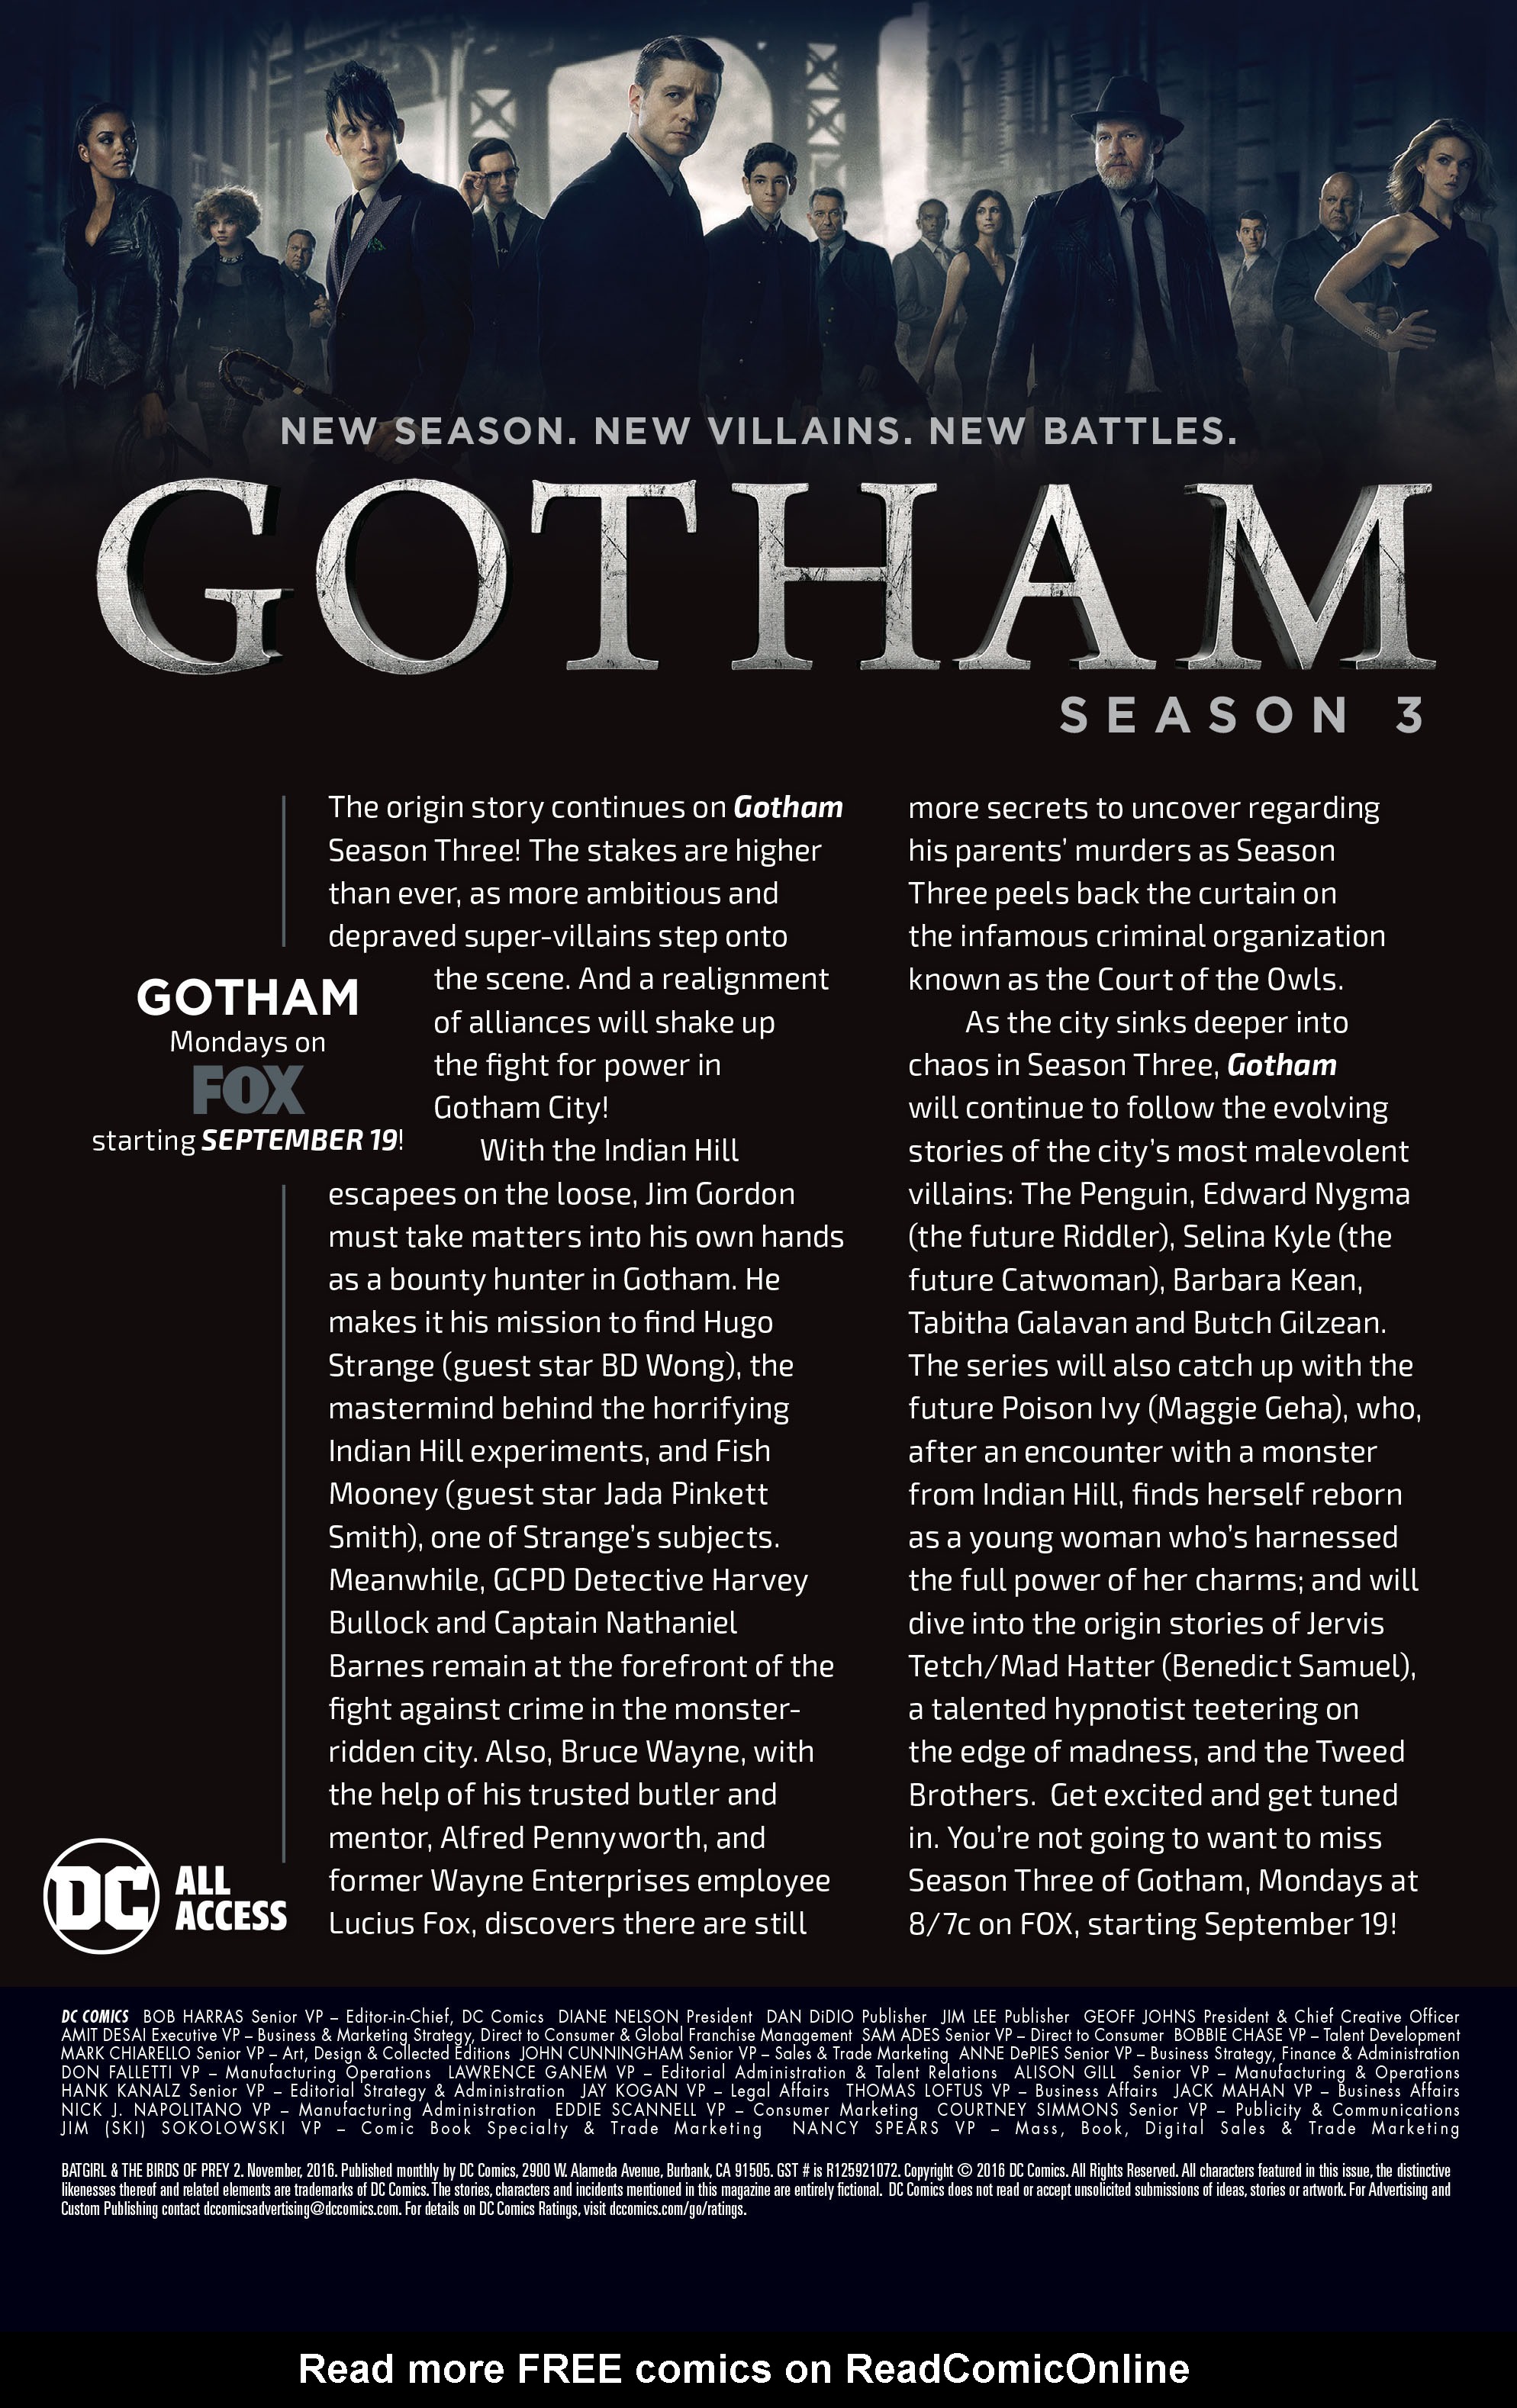 Continued story. Битва за Готэм. Butch Gilzean/Tabitha Galavan. Gotham of Future. Gotham перевод.